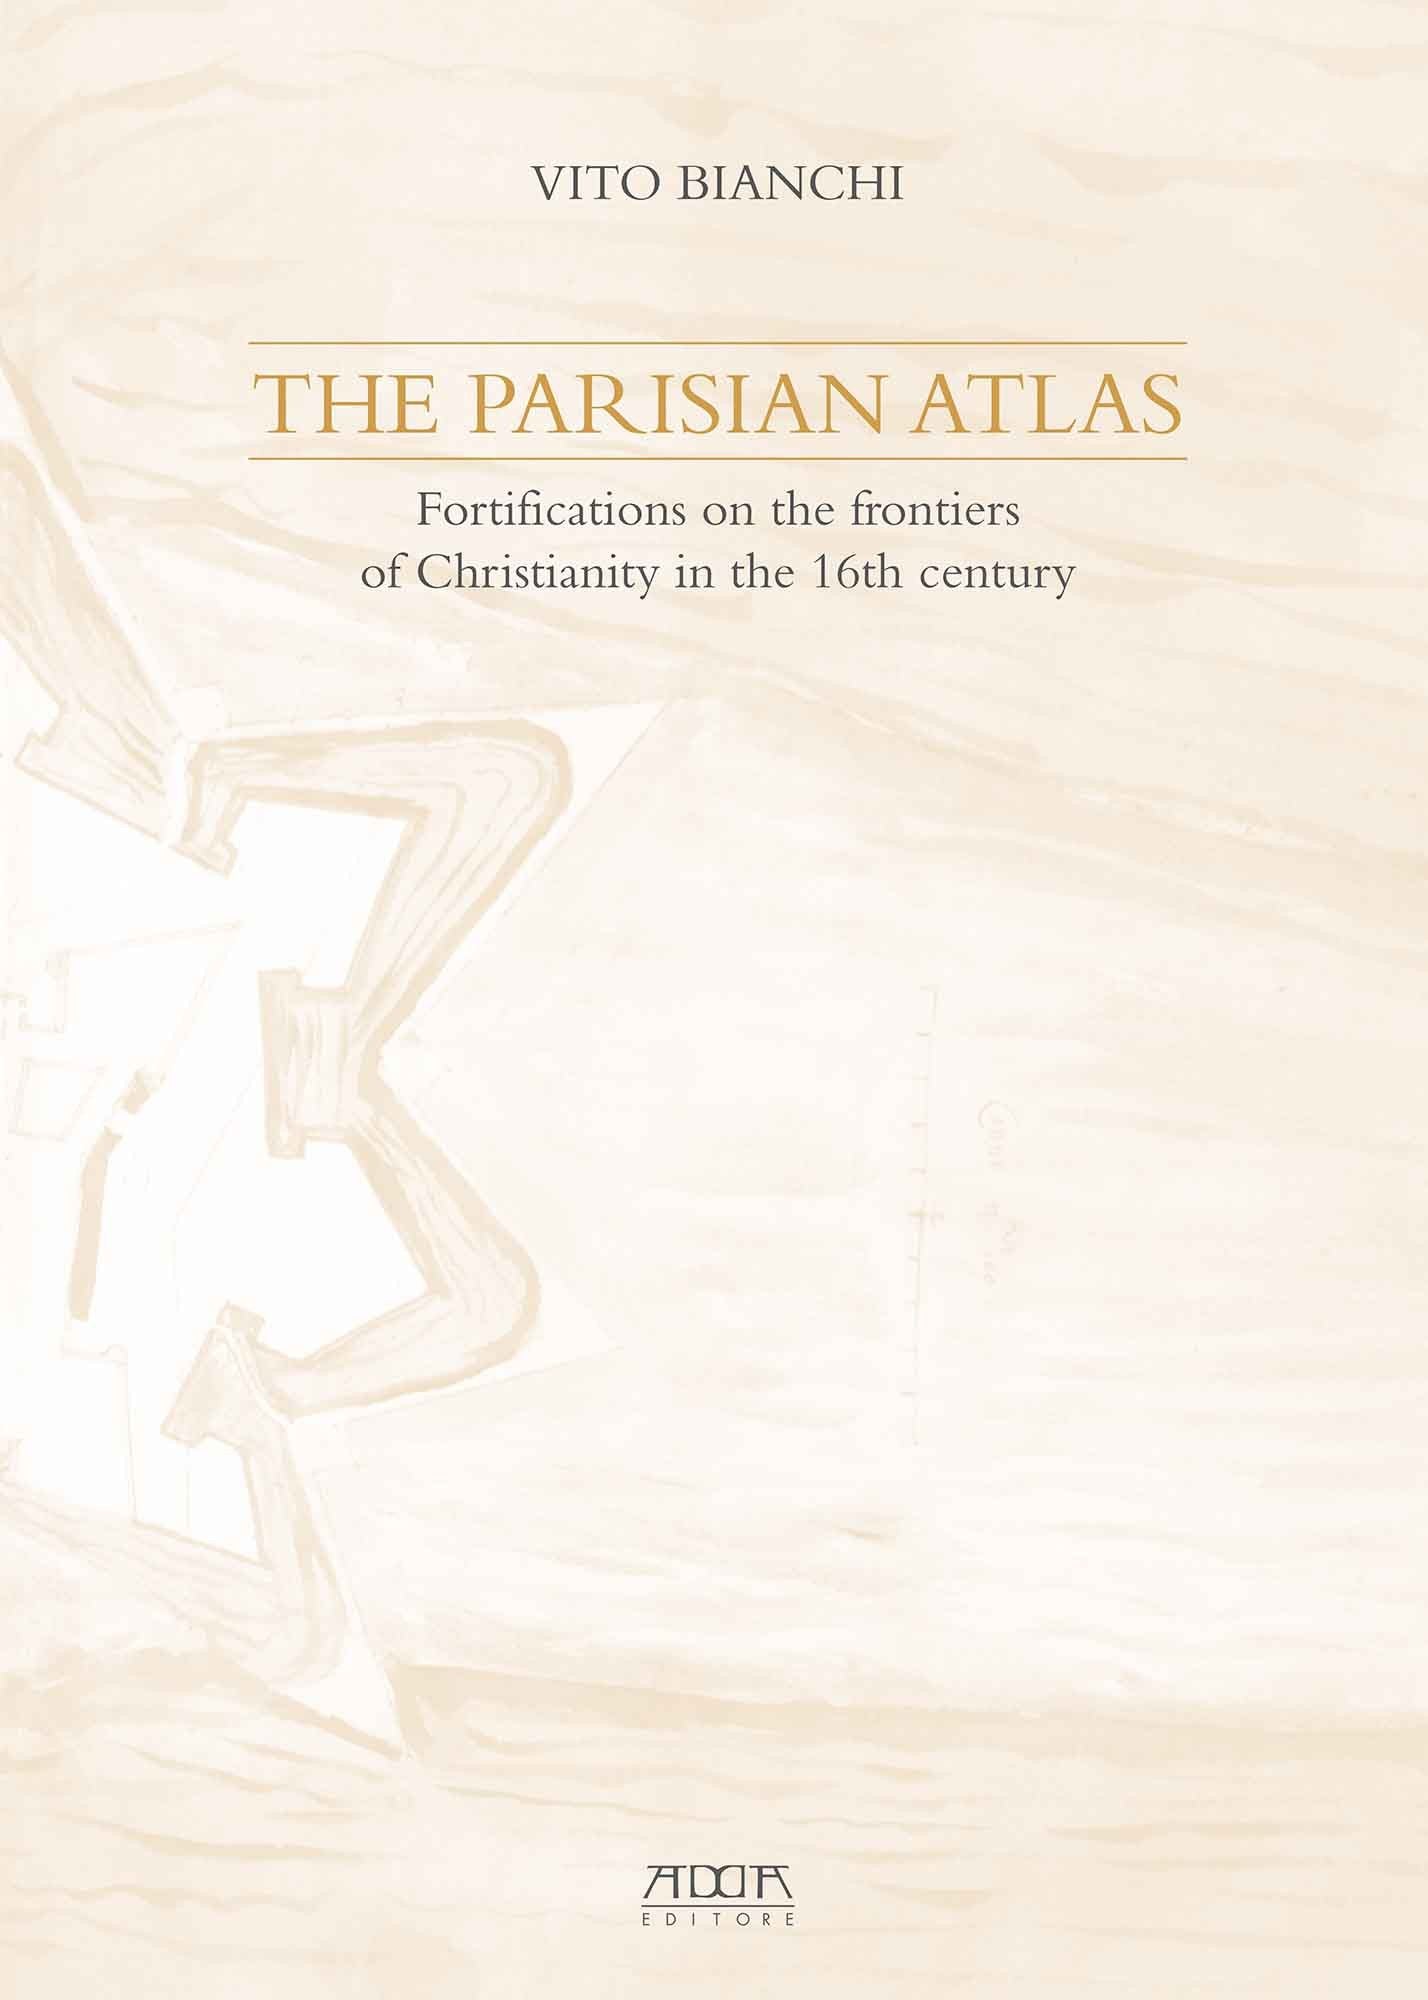 The parisian atlas